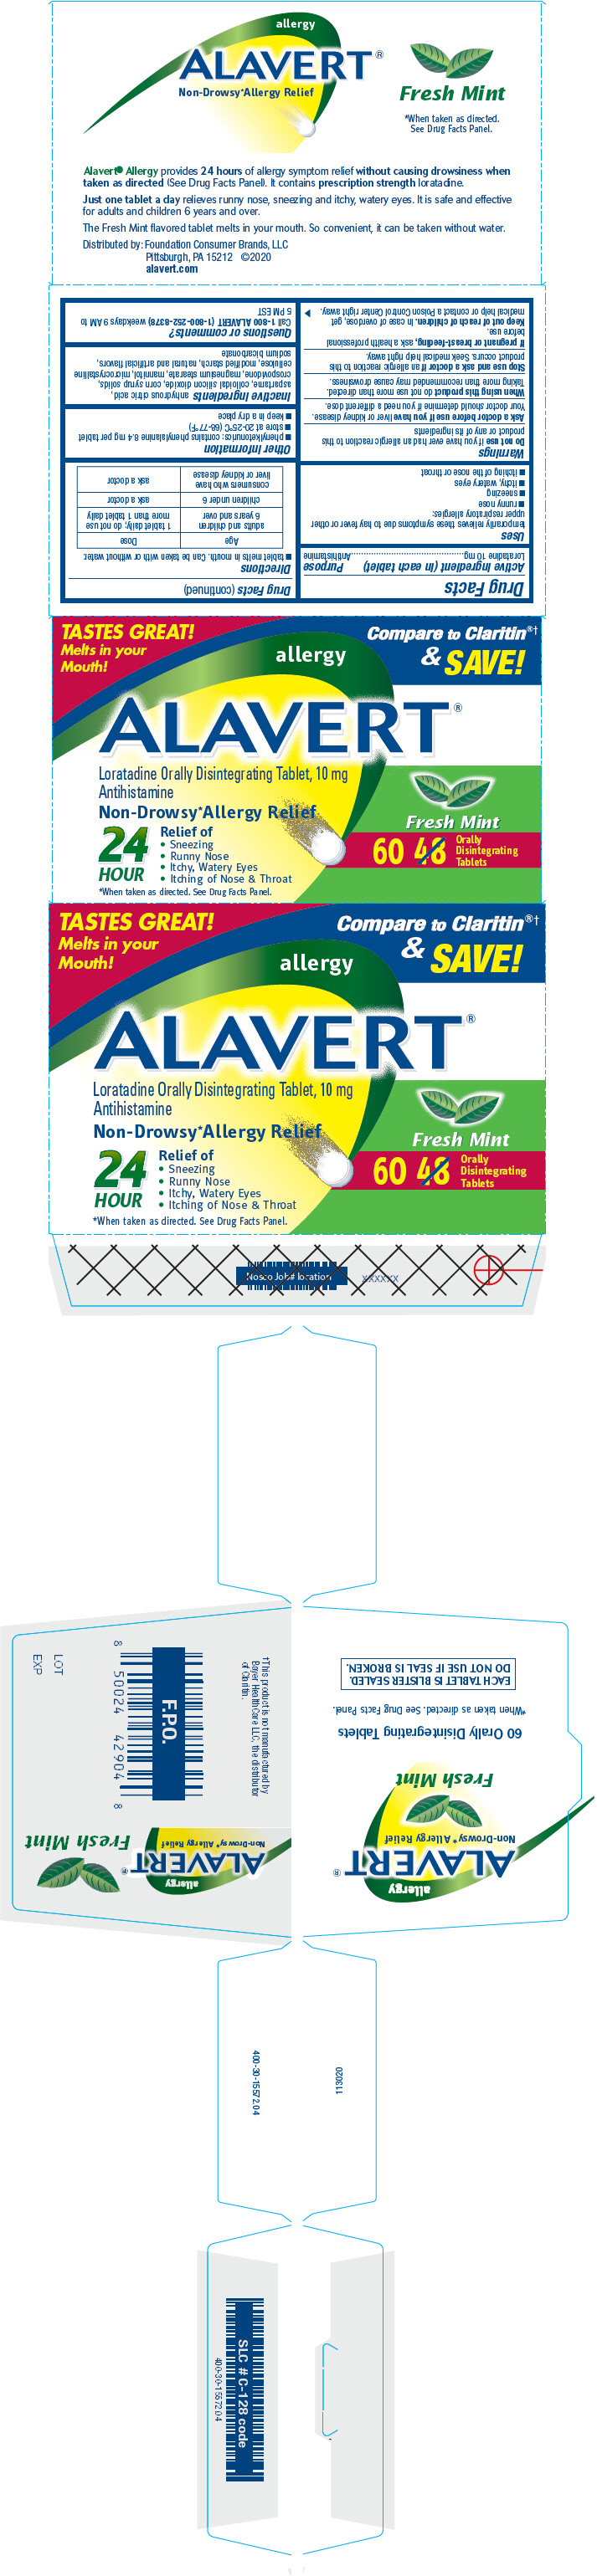 PRINCIPAL DISPLAY PANEL - 10 mg Tablet Blister Pack Carton